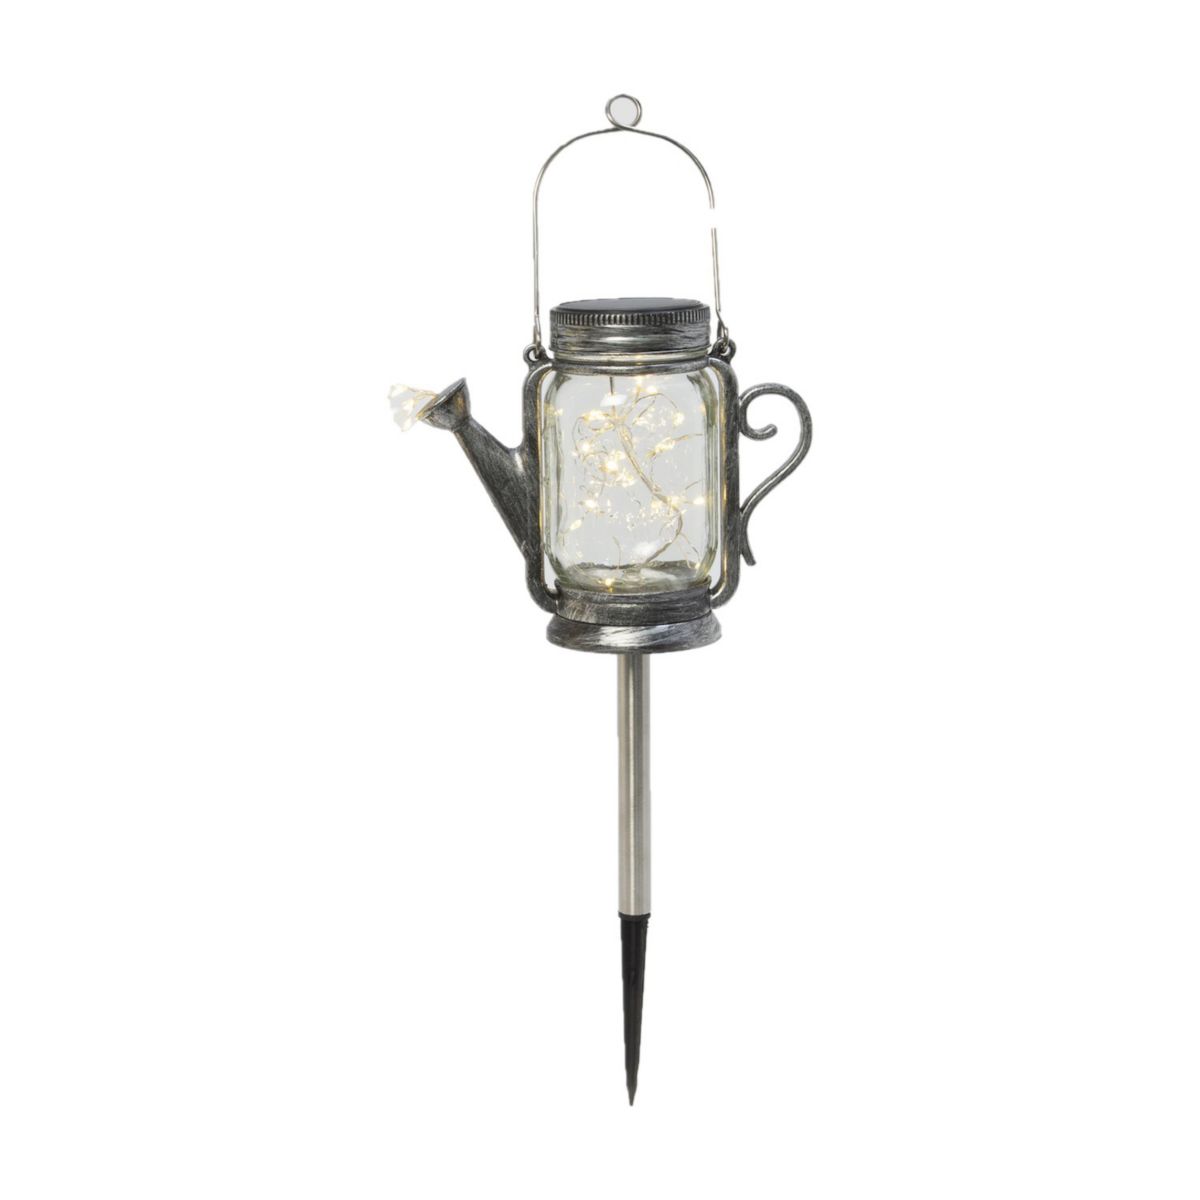 Lighted Solar Powered Hanging Teapot Lantern Unbranded